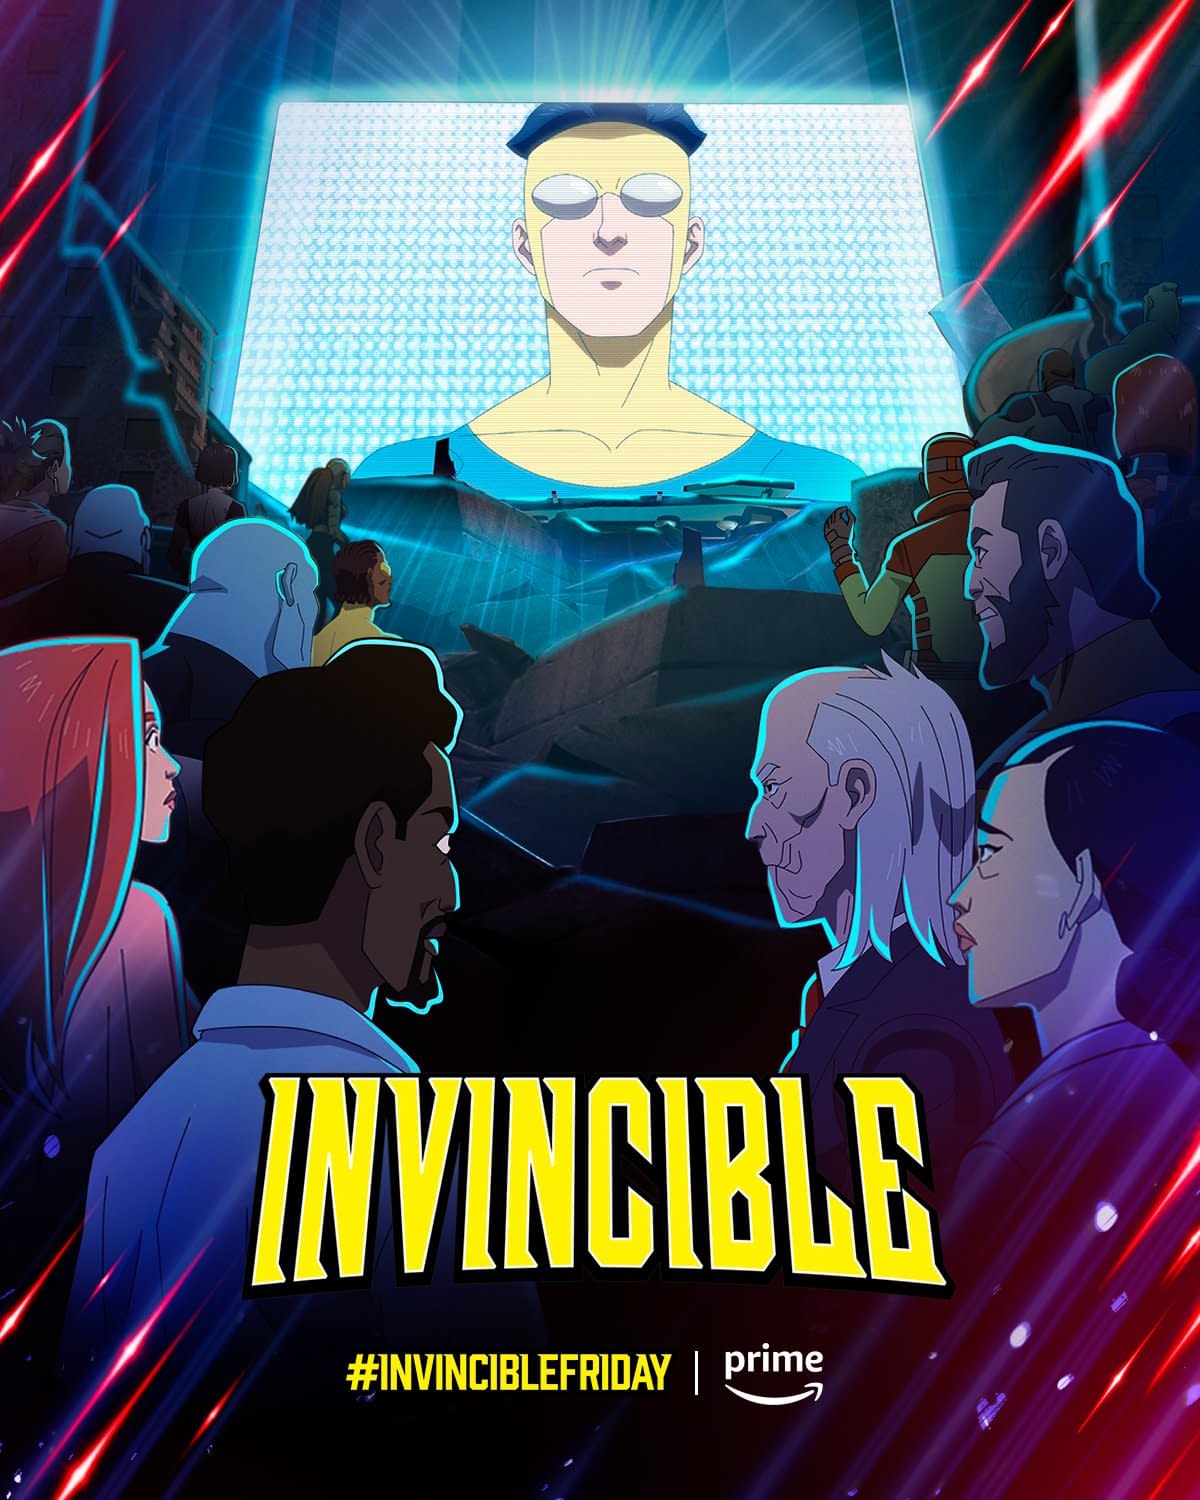 Invincible Season 2 Episode 4 Ending Explained, Cast, Plot and more - News